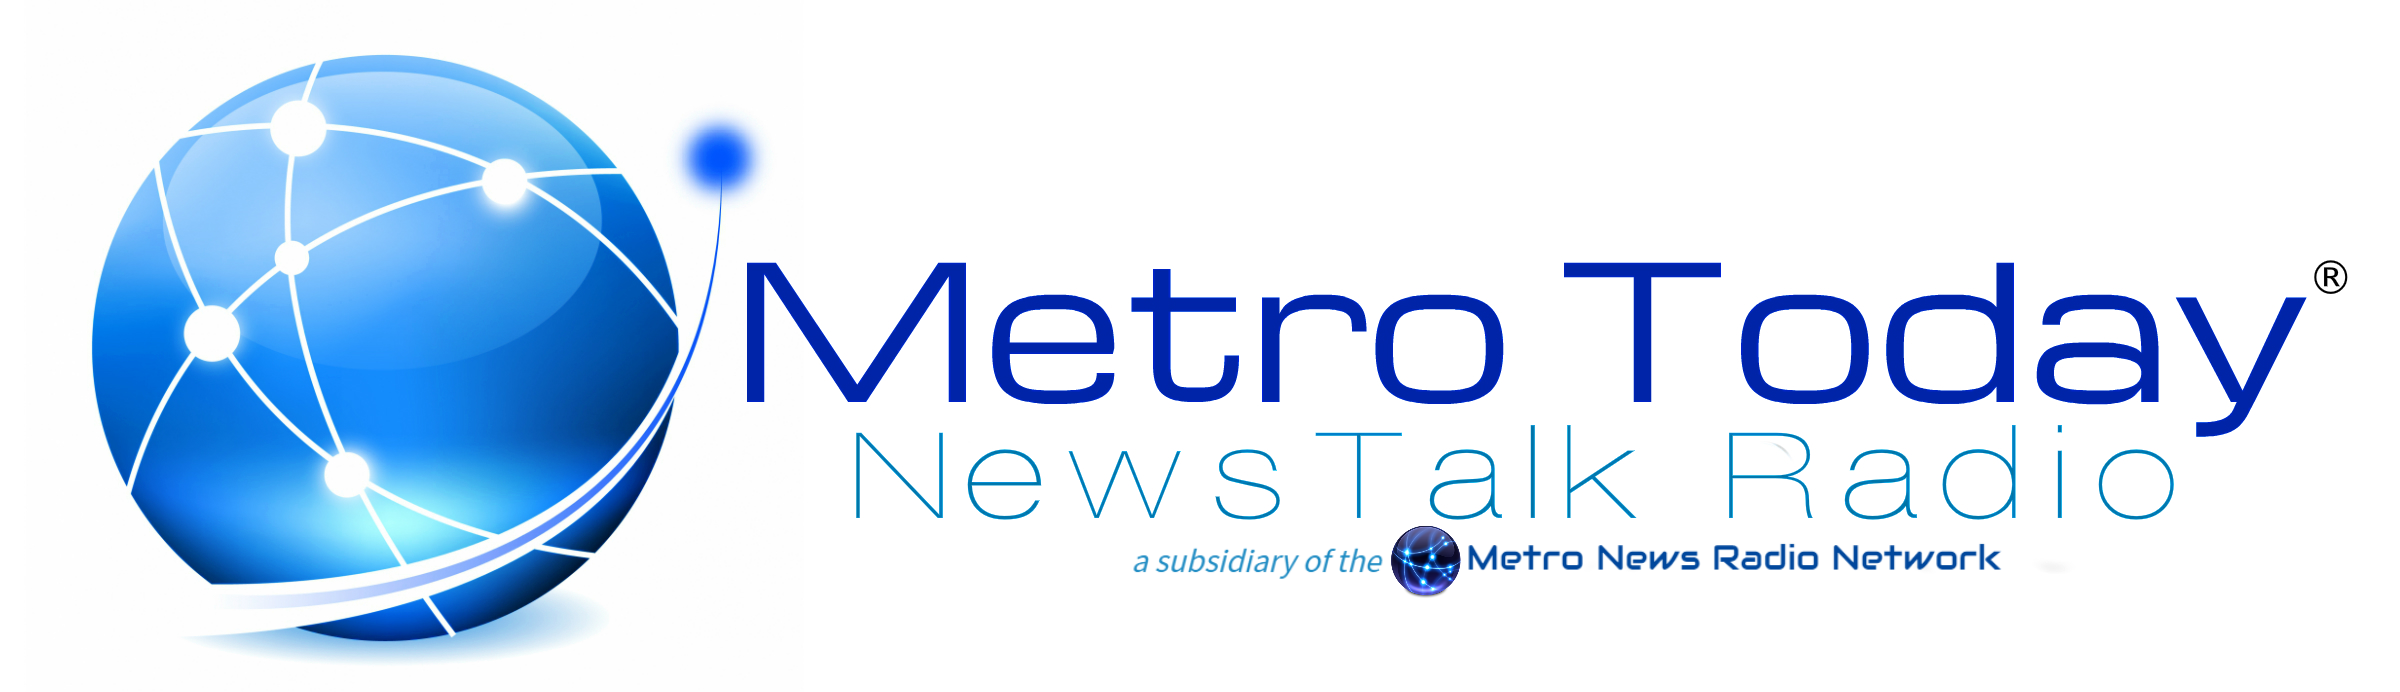 Metro Today NewsTalk Radio